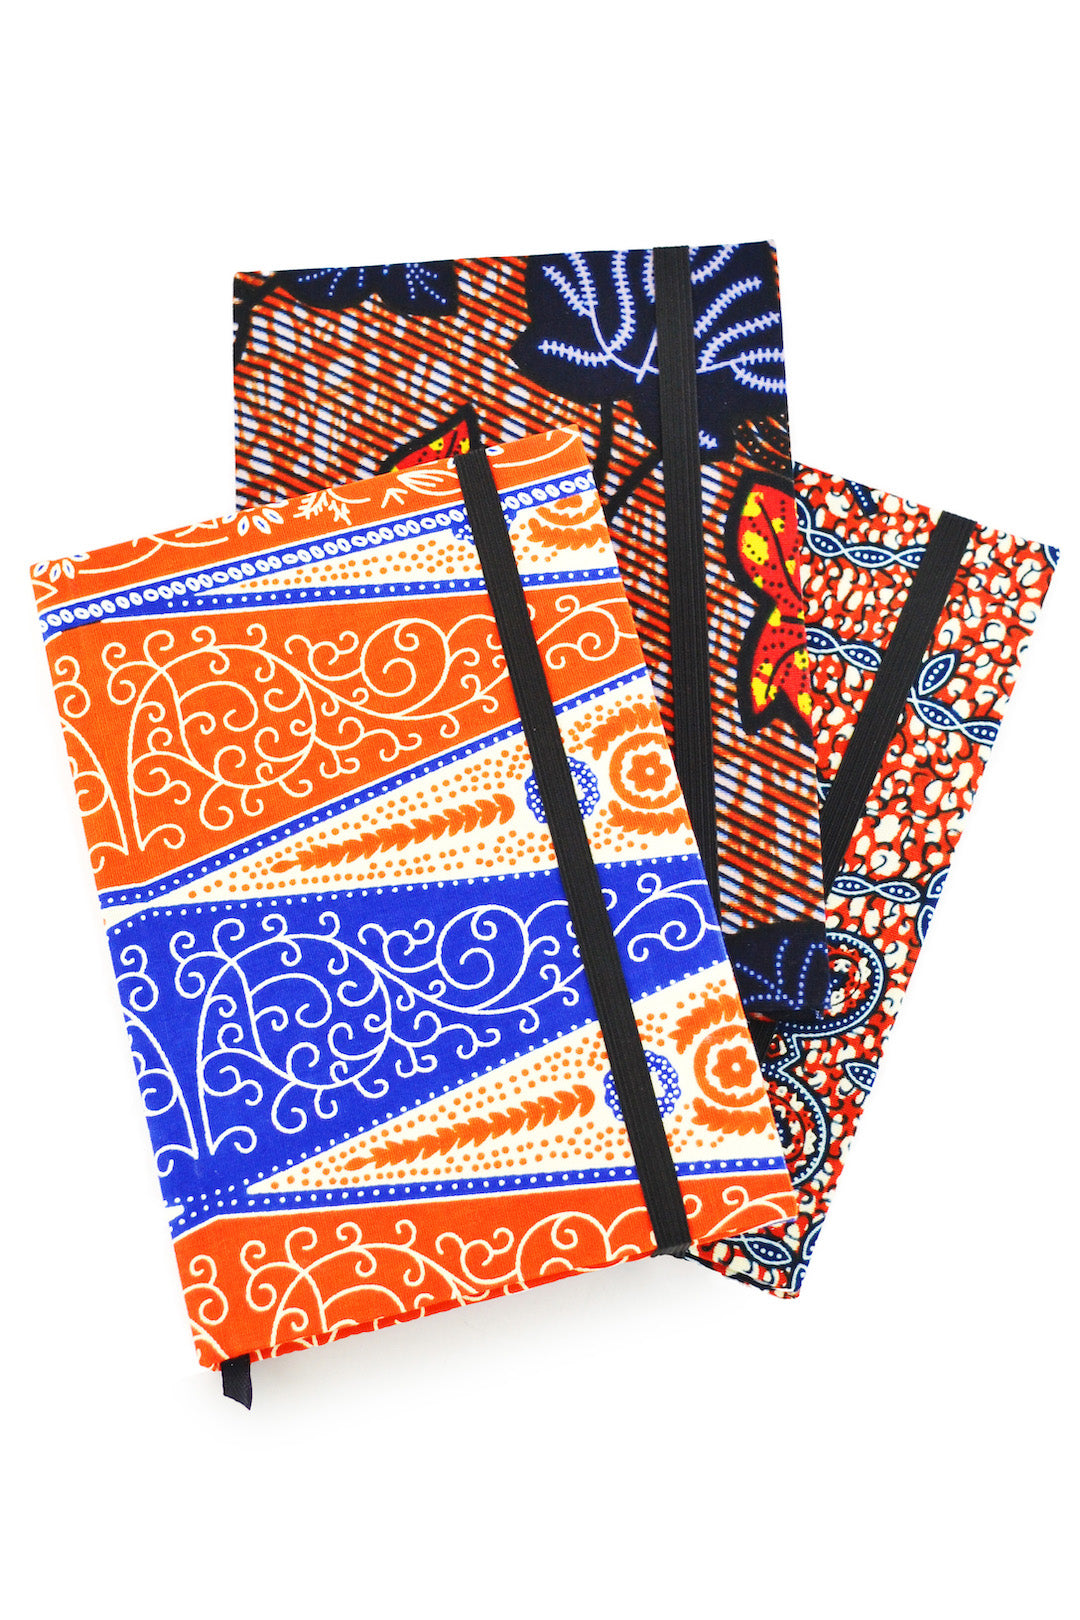 Ankara Wax Cloth Covered Journals - Warm Colors